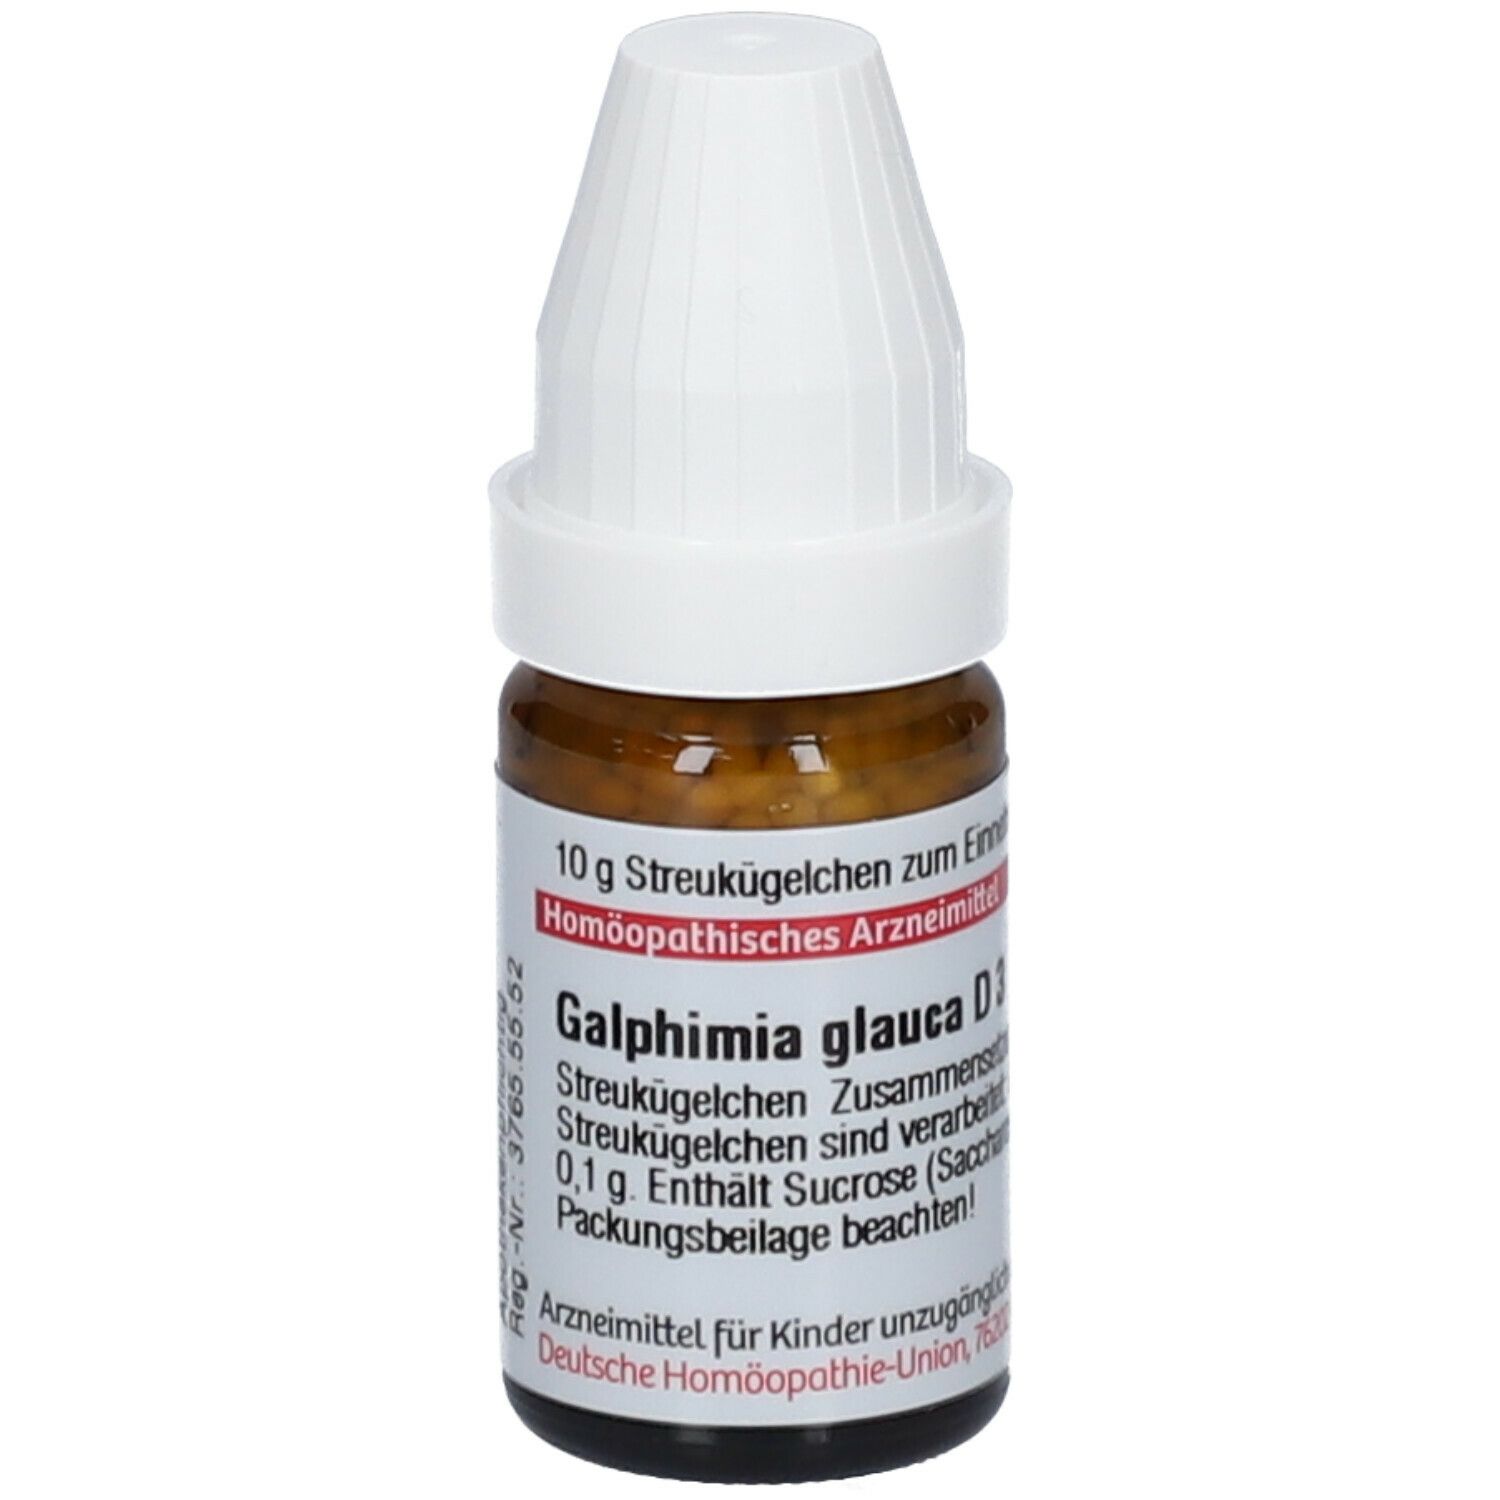 DHU Galphimia Glauca D3